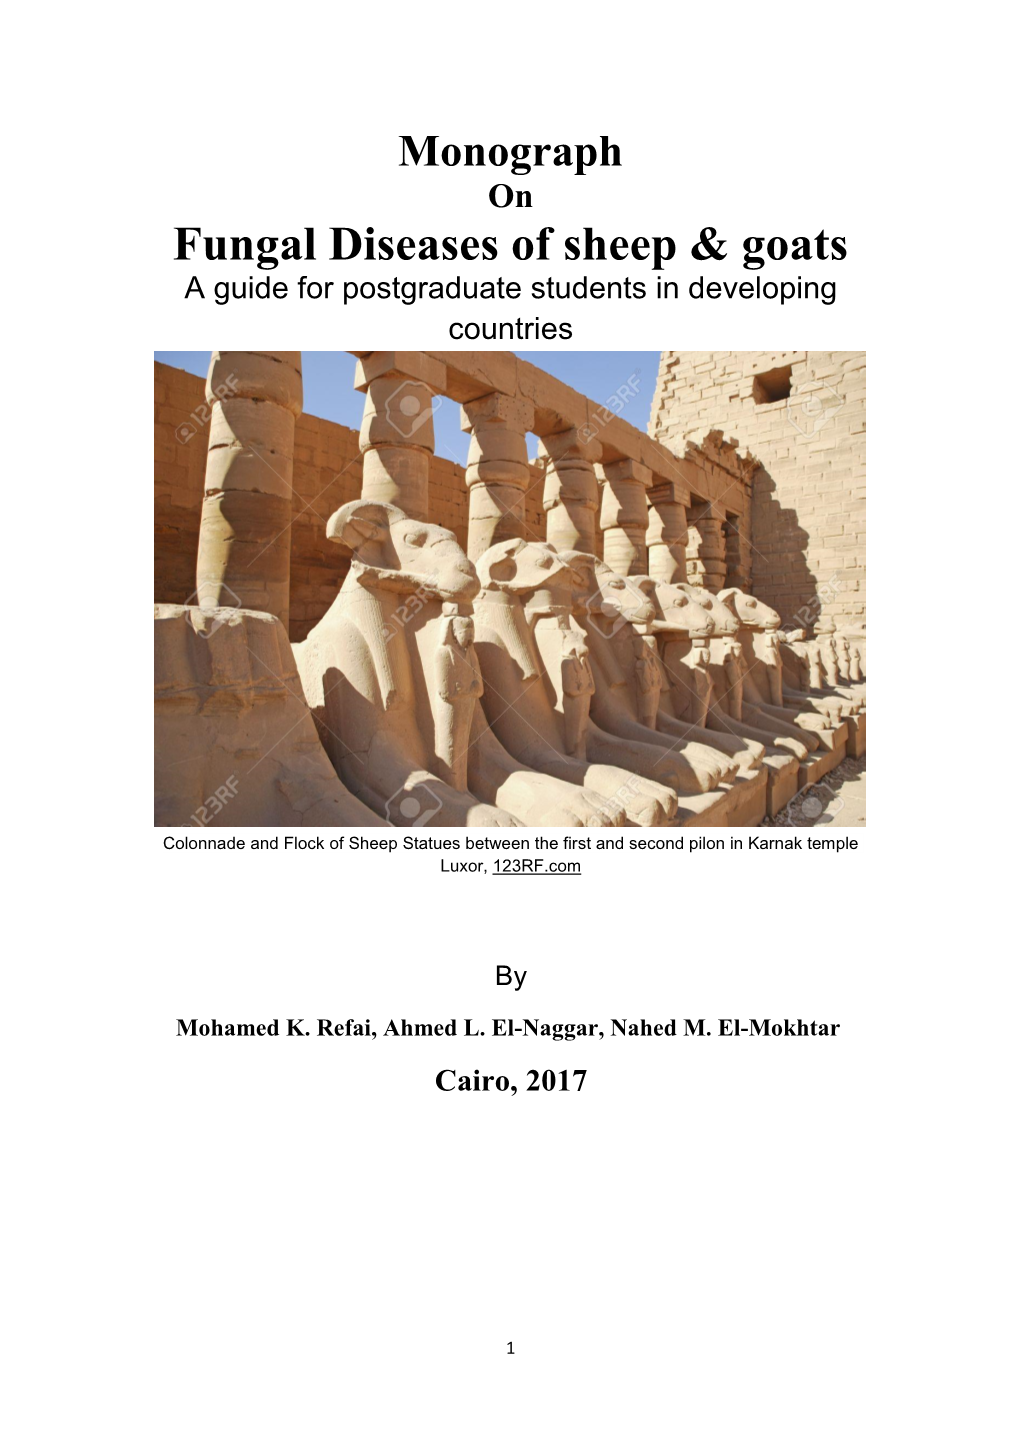 Fungal Diseases of Sheep & Goats